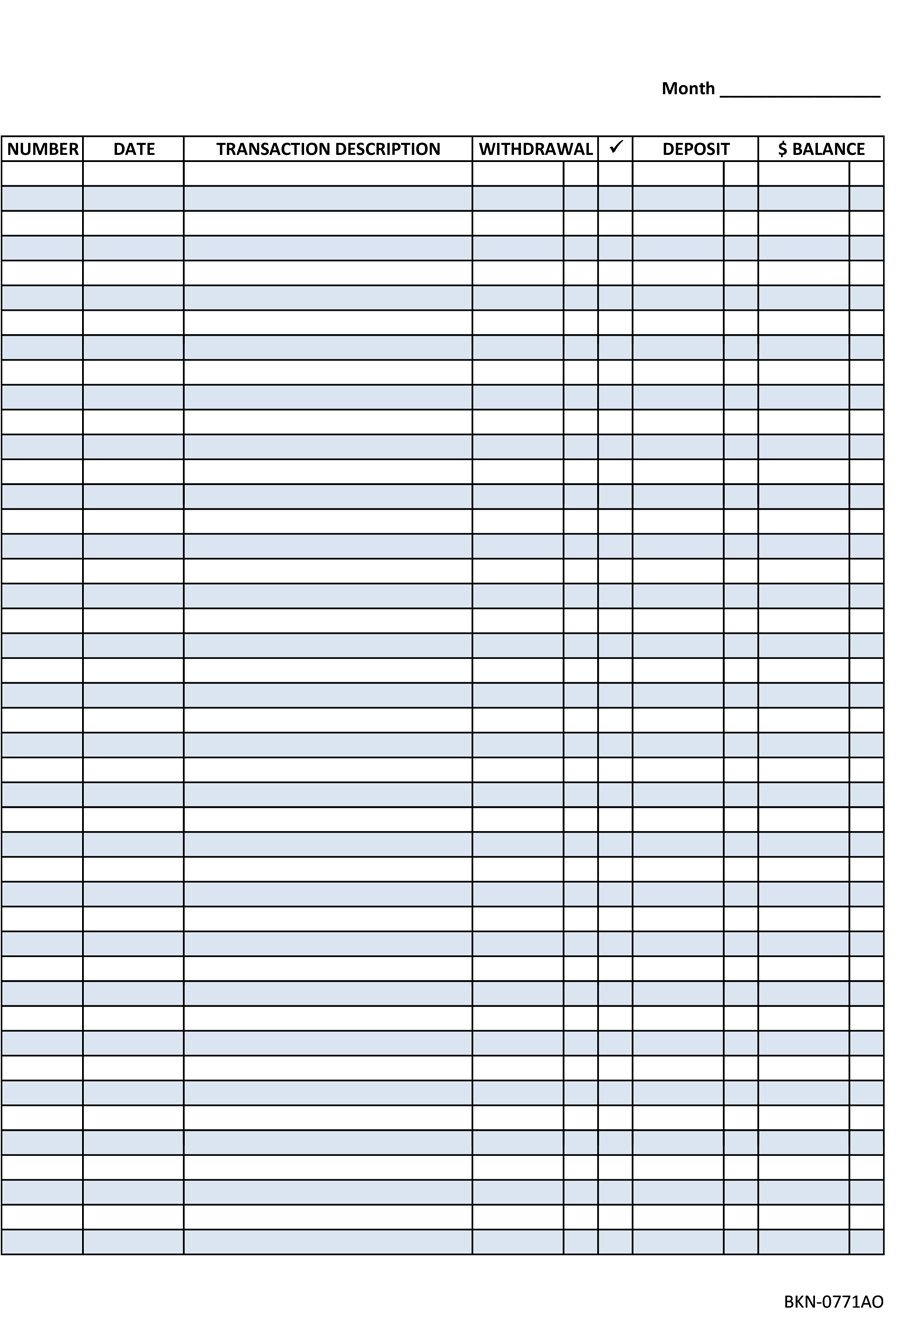 37 Checkbook Register Templates [100% Free, Printable] ᐅ Template Lab - Free Printable Checkbook Register